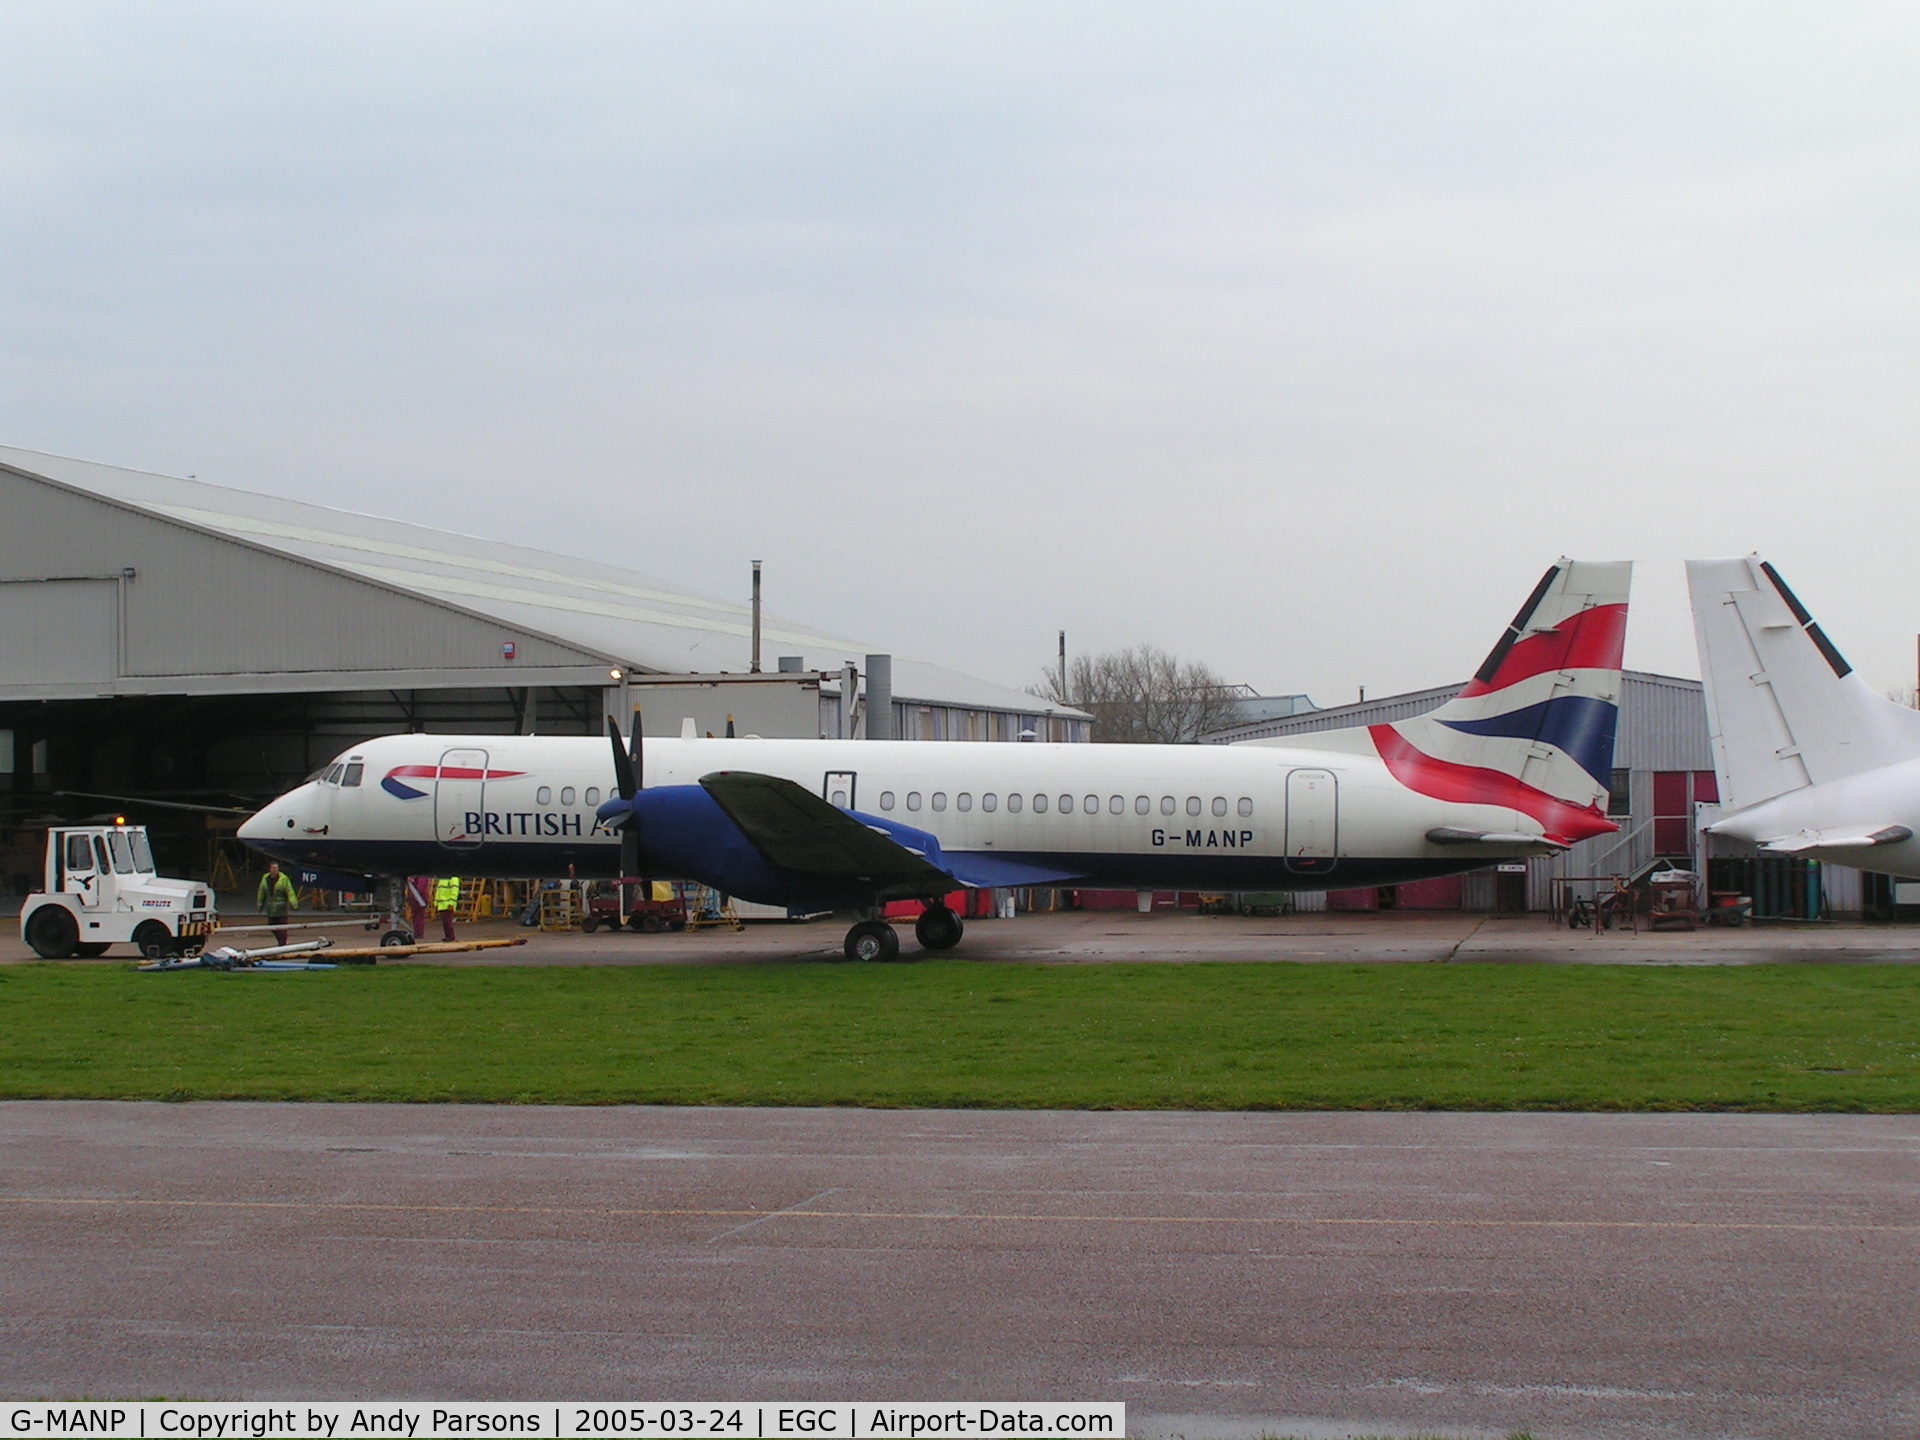 G-MANP, 1990 British Aerospace ATP C/N 2023, Awaiting new owner at Southend